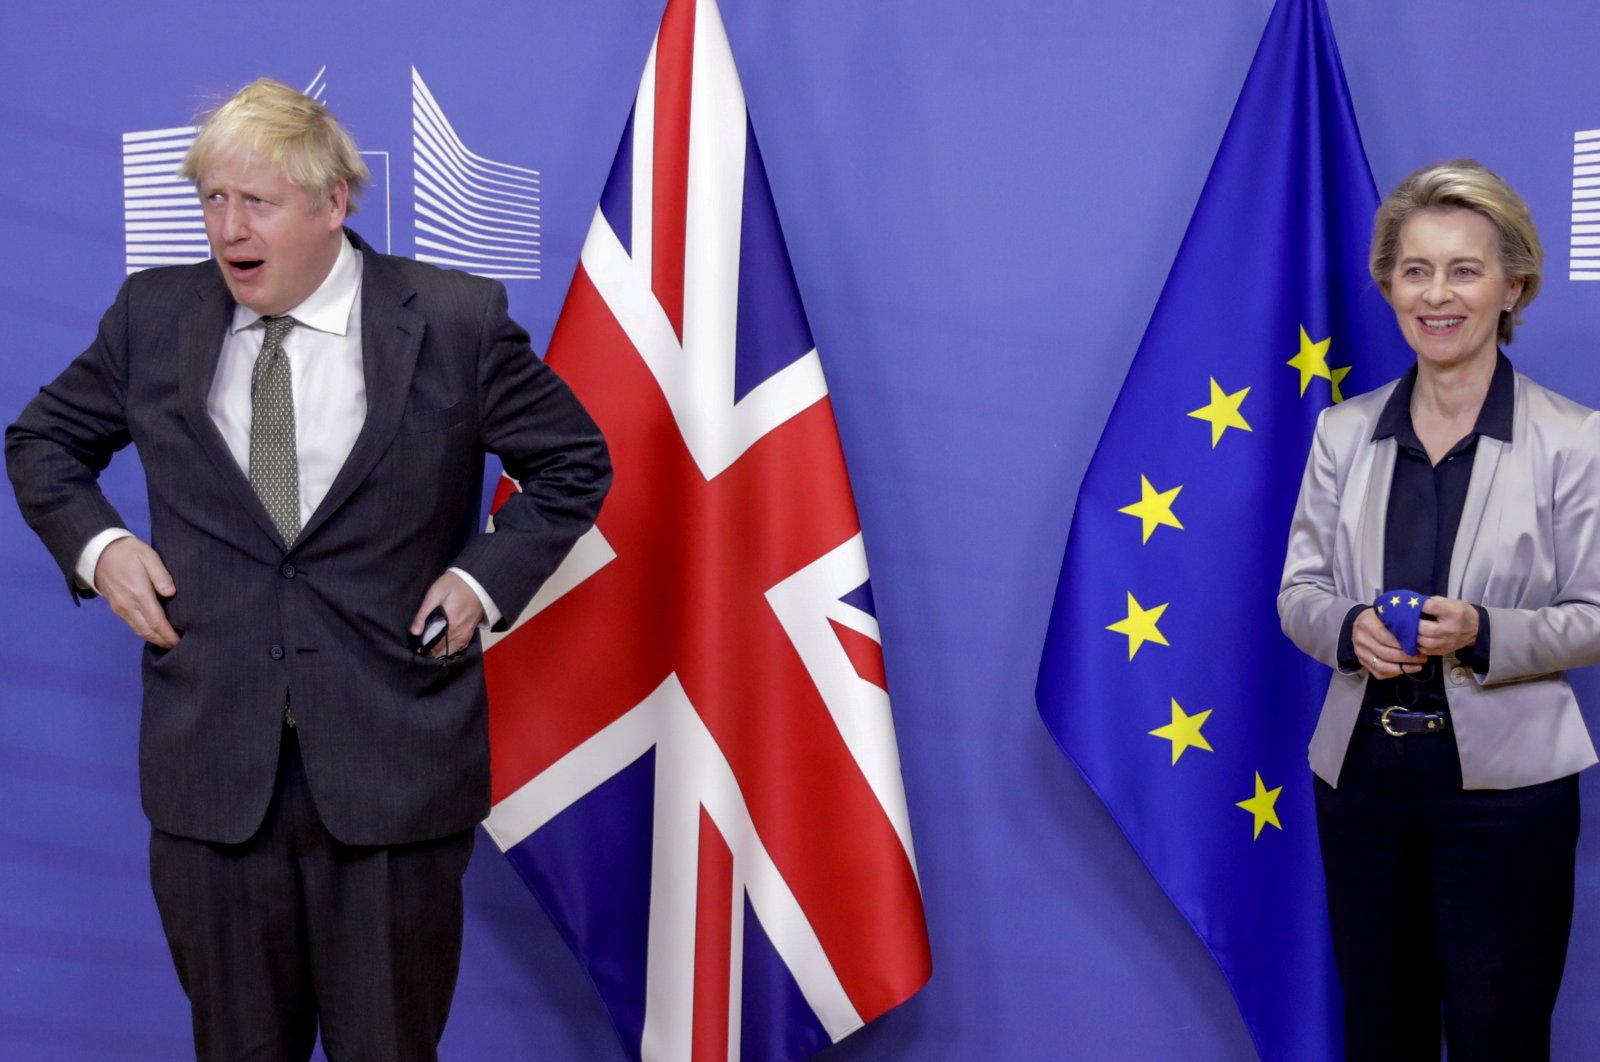 European Commission President Ursula von der Leyen (R) welcomes British Prime Minister Boris Johnson prior to a meeting at EU headquarters in Brussels, Dec. 9, 2020. (AP Photo)